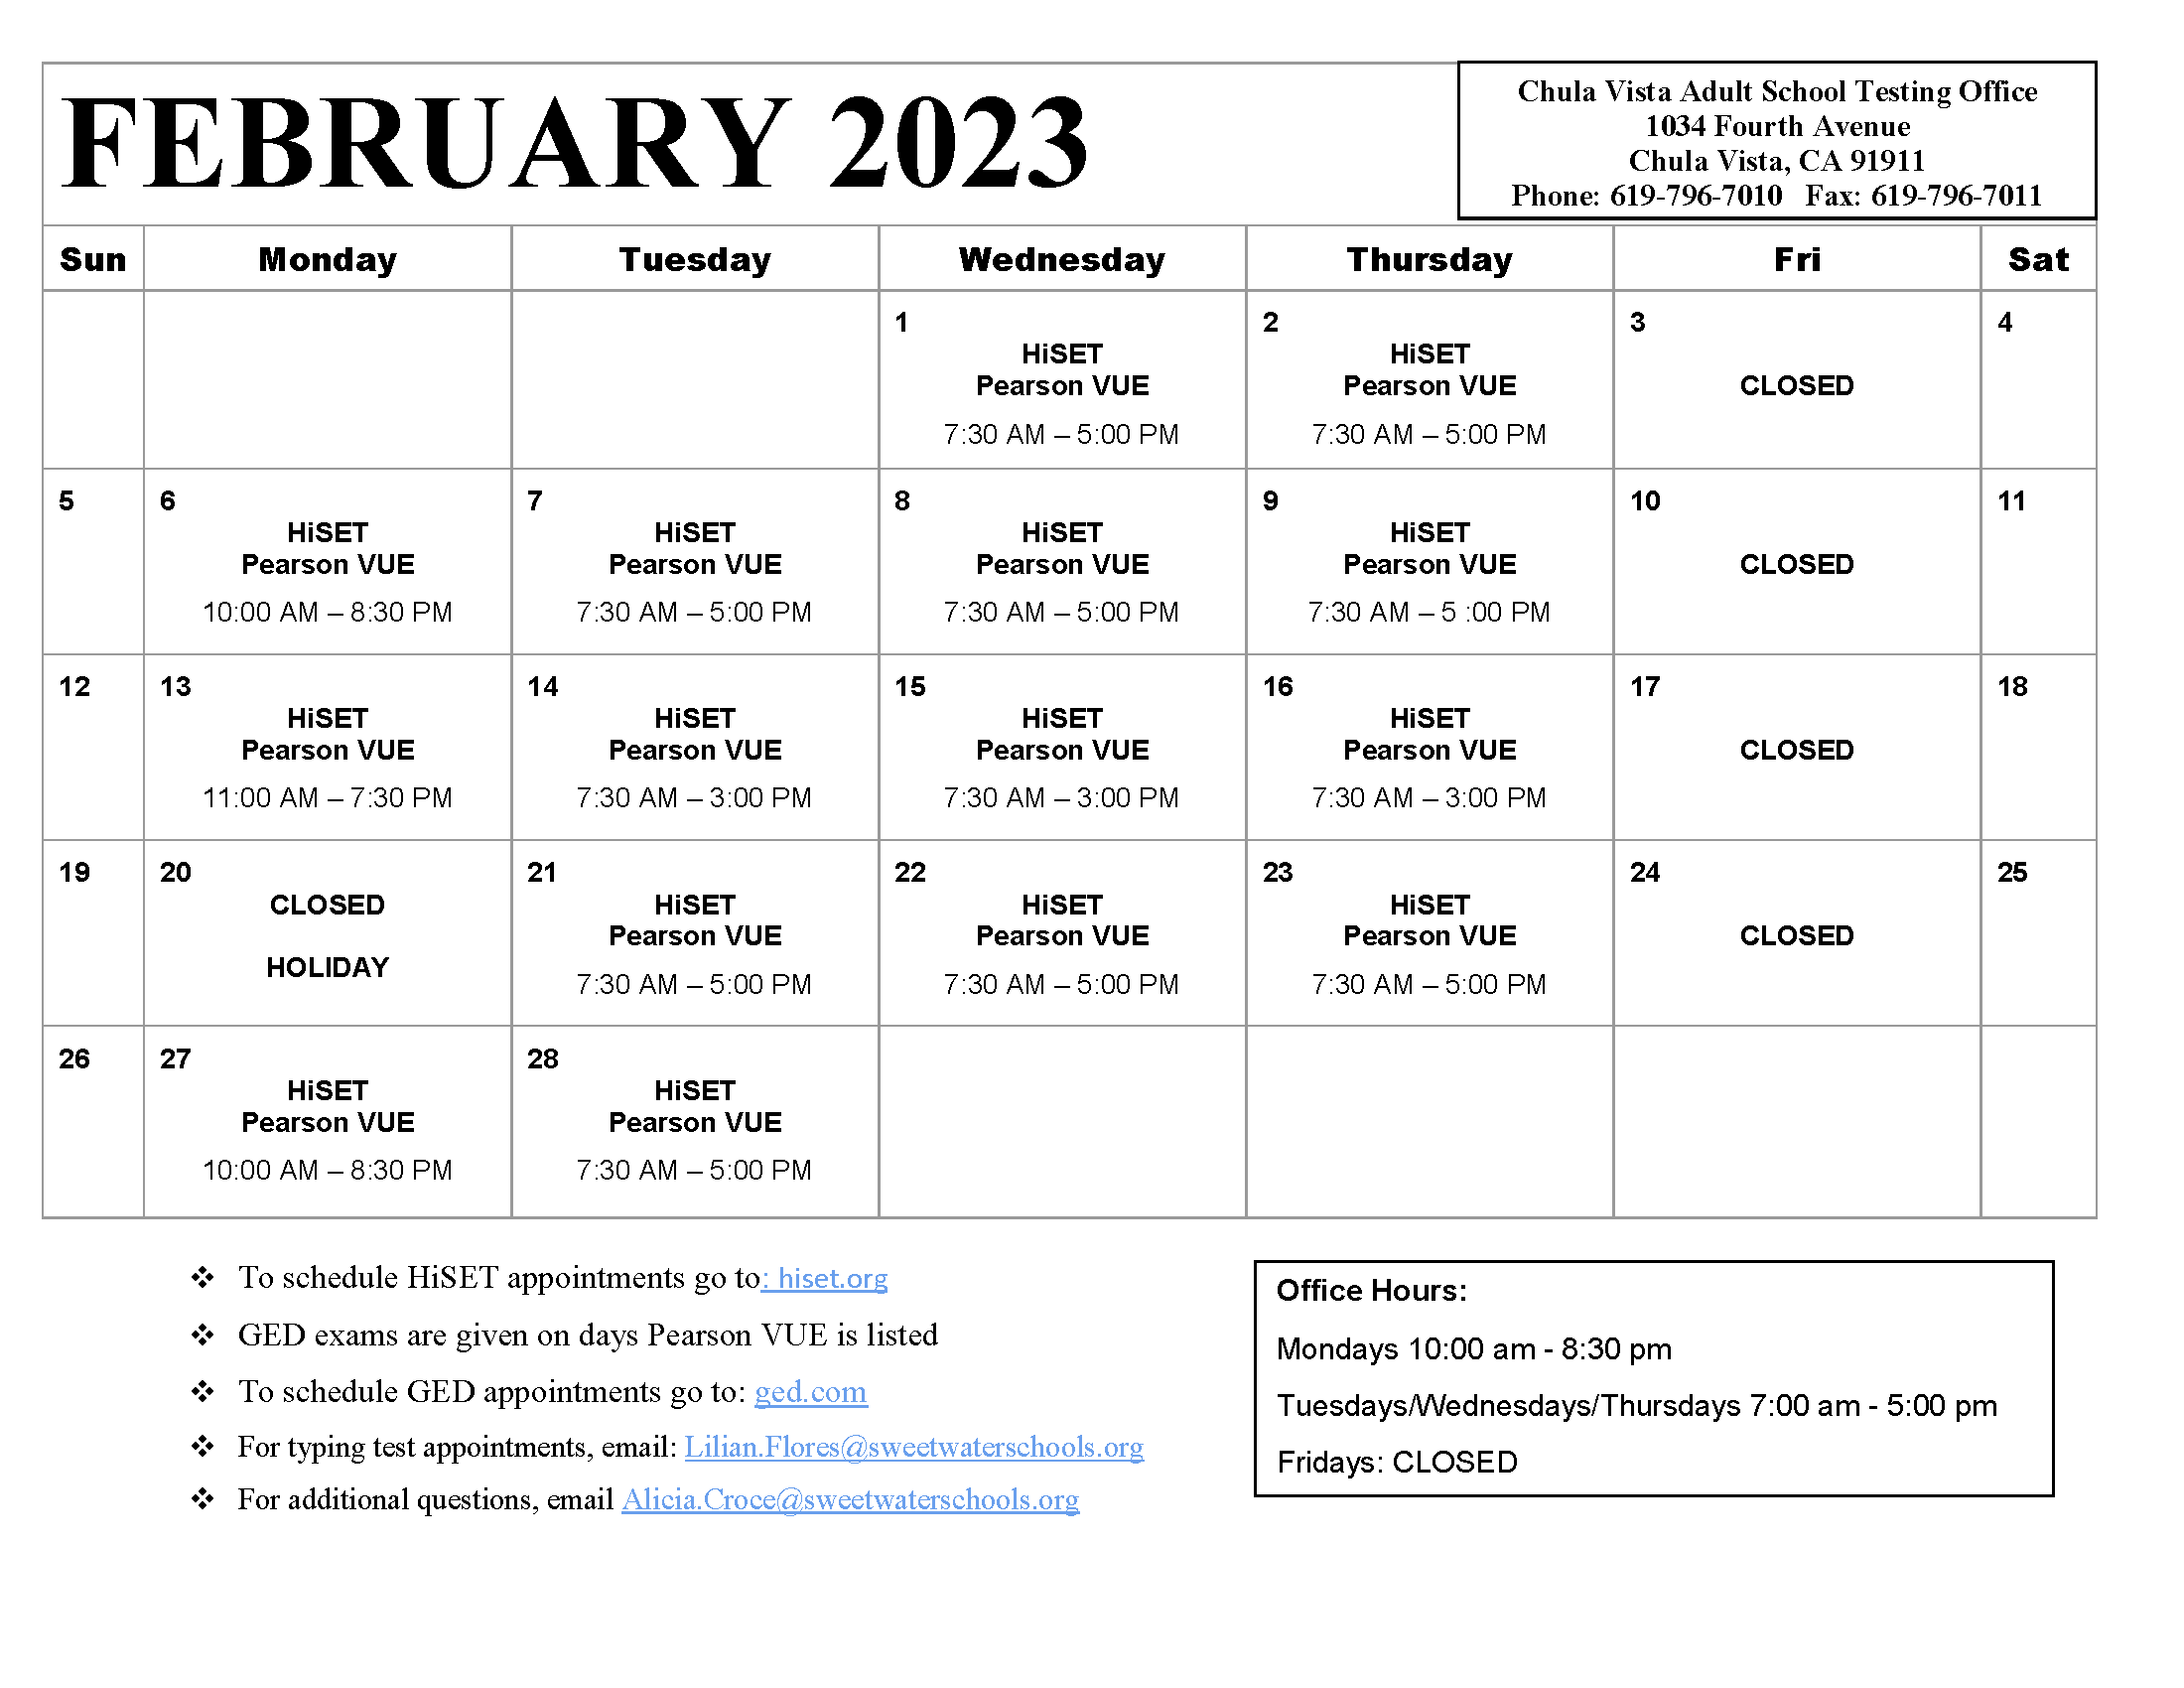 February 2023 Chula Vista Adult School Testing Center calendar.